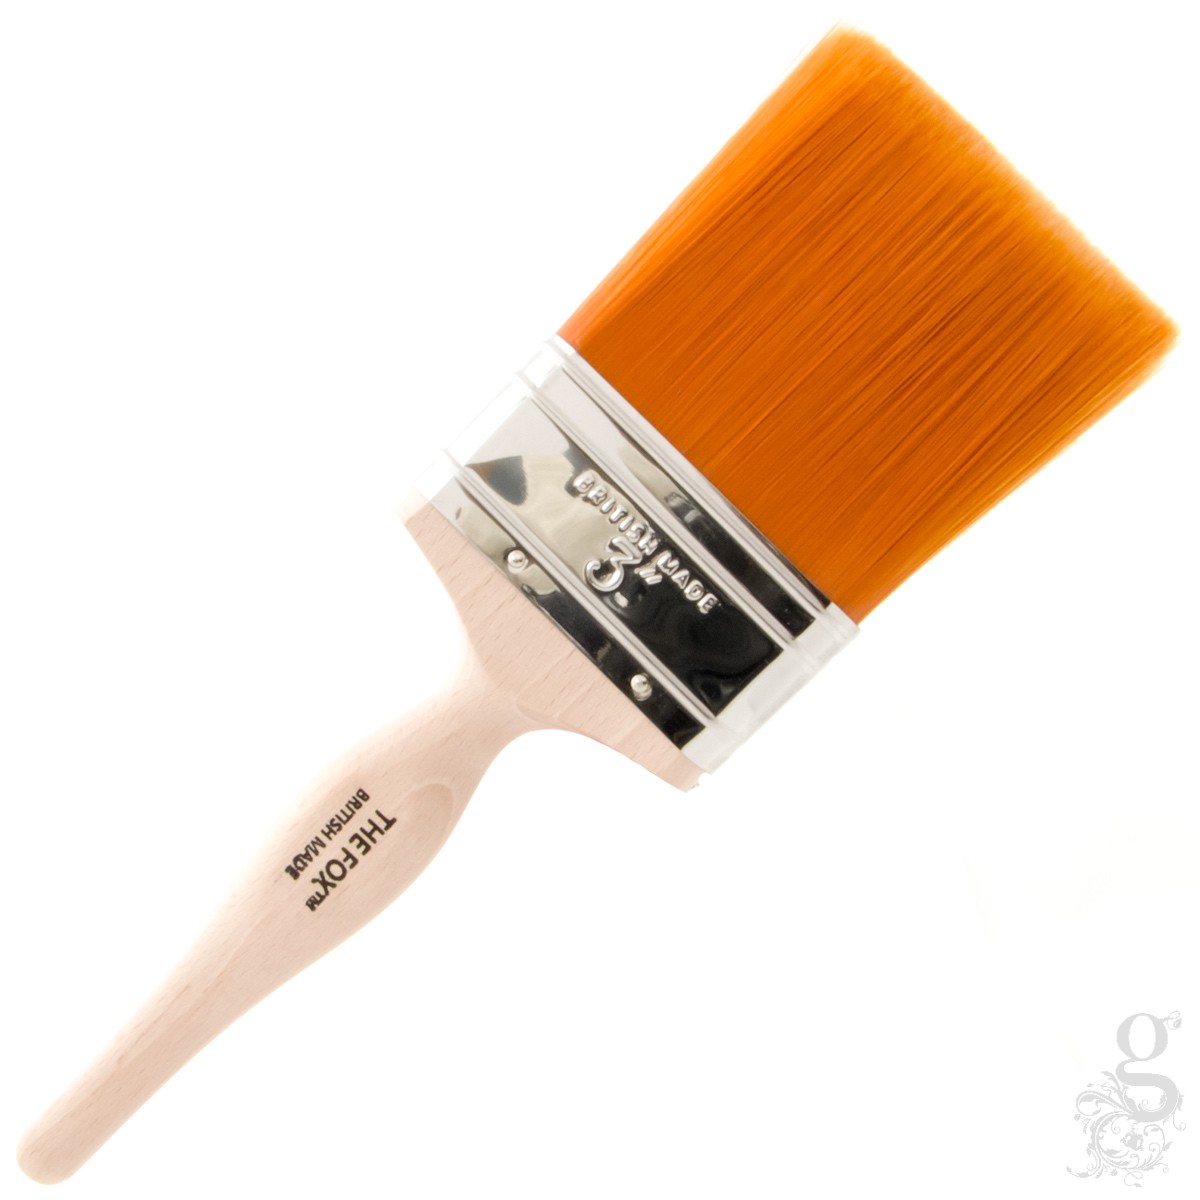 The Fox Straight Cut Paint Brush 3 inch